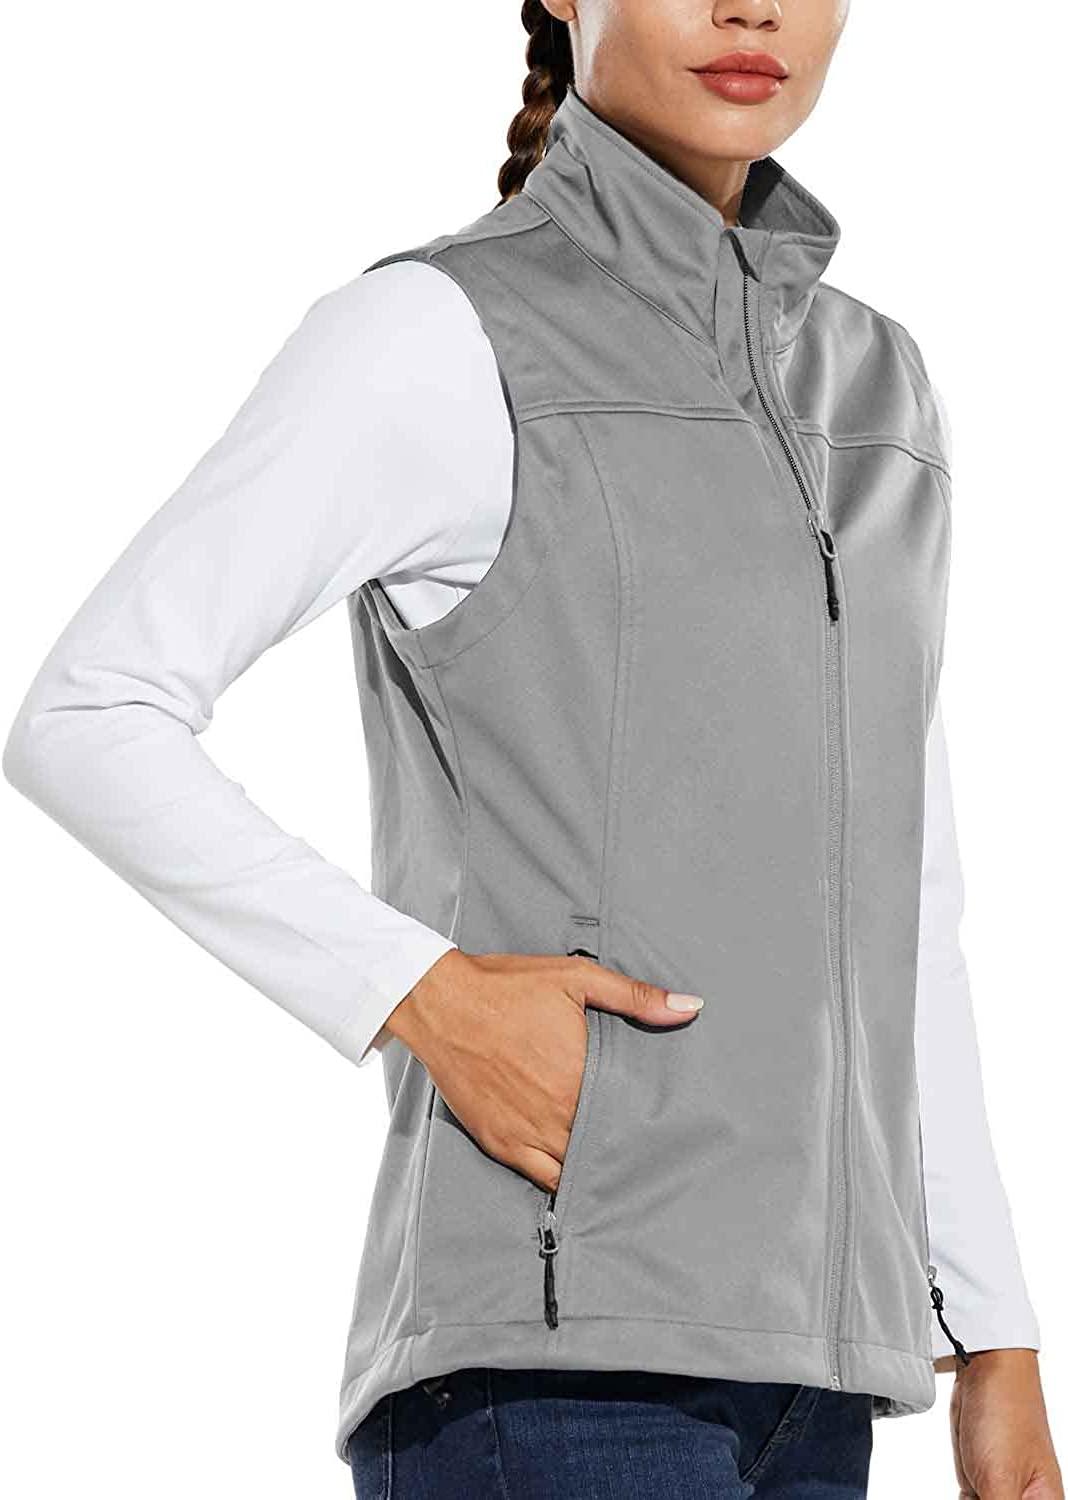 BALEAF Women's Lightweight Vest Softshell Sleeveless Jacket